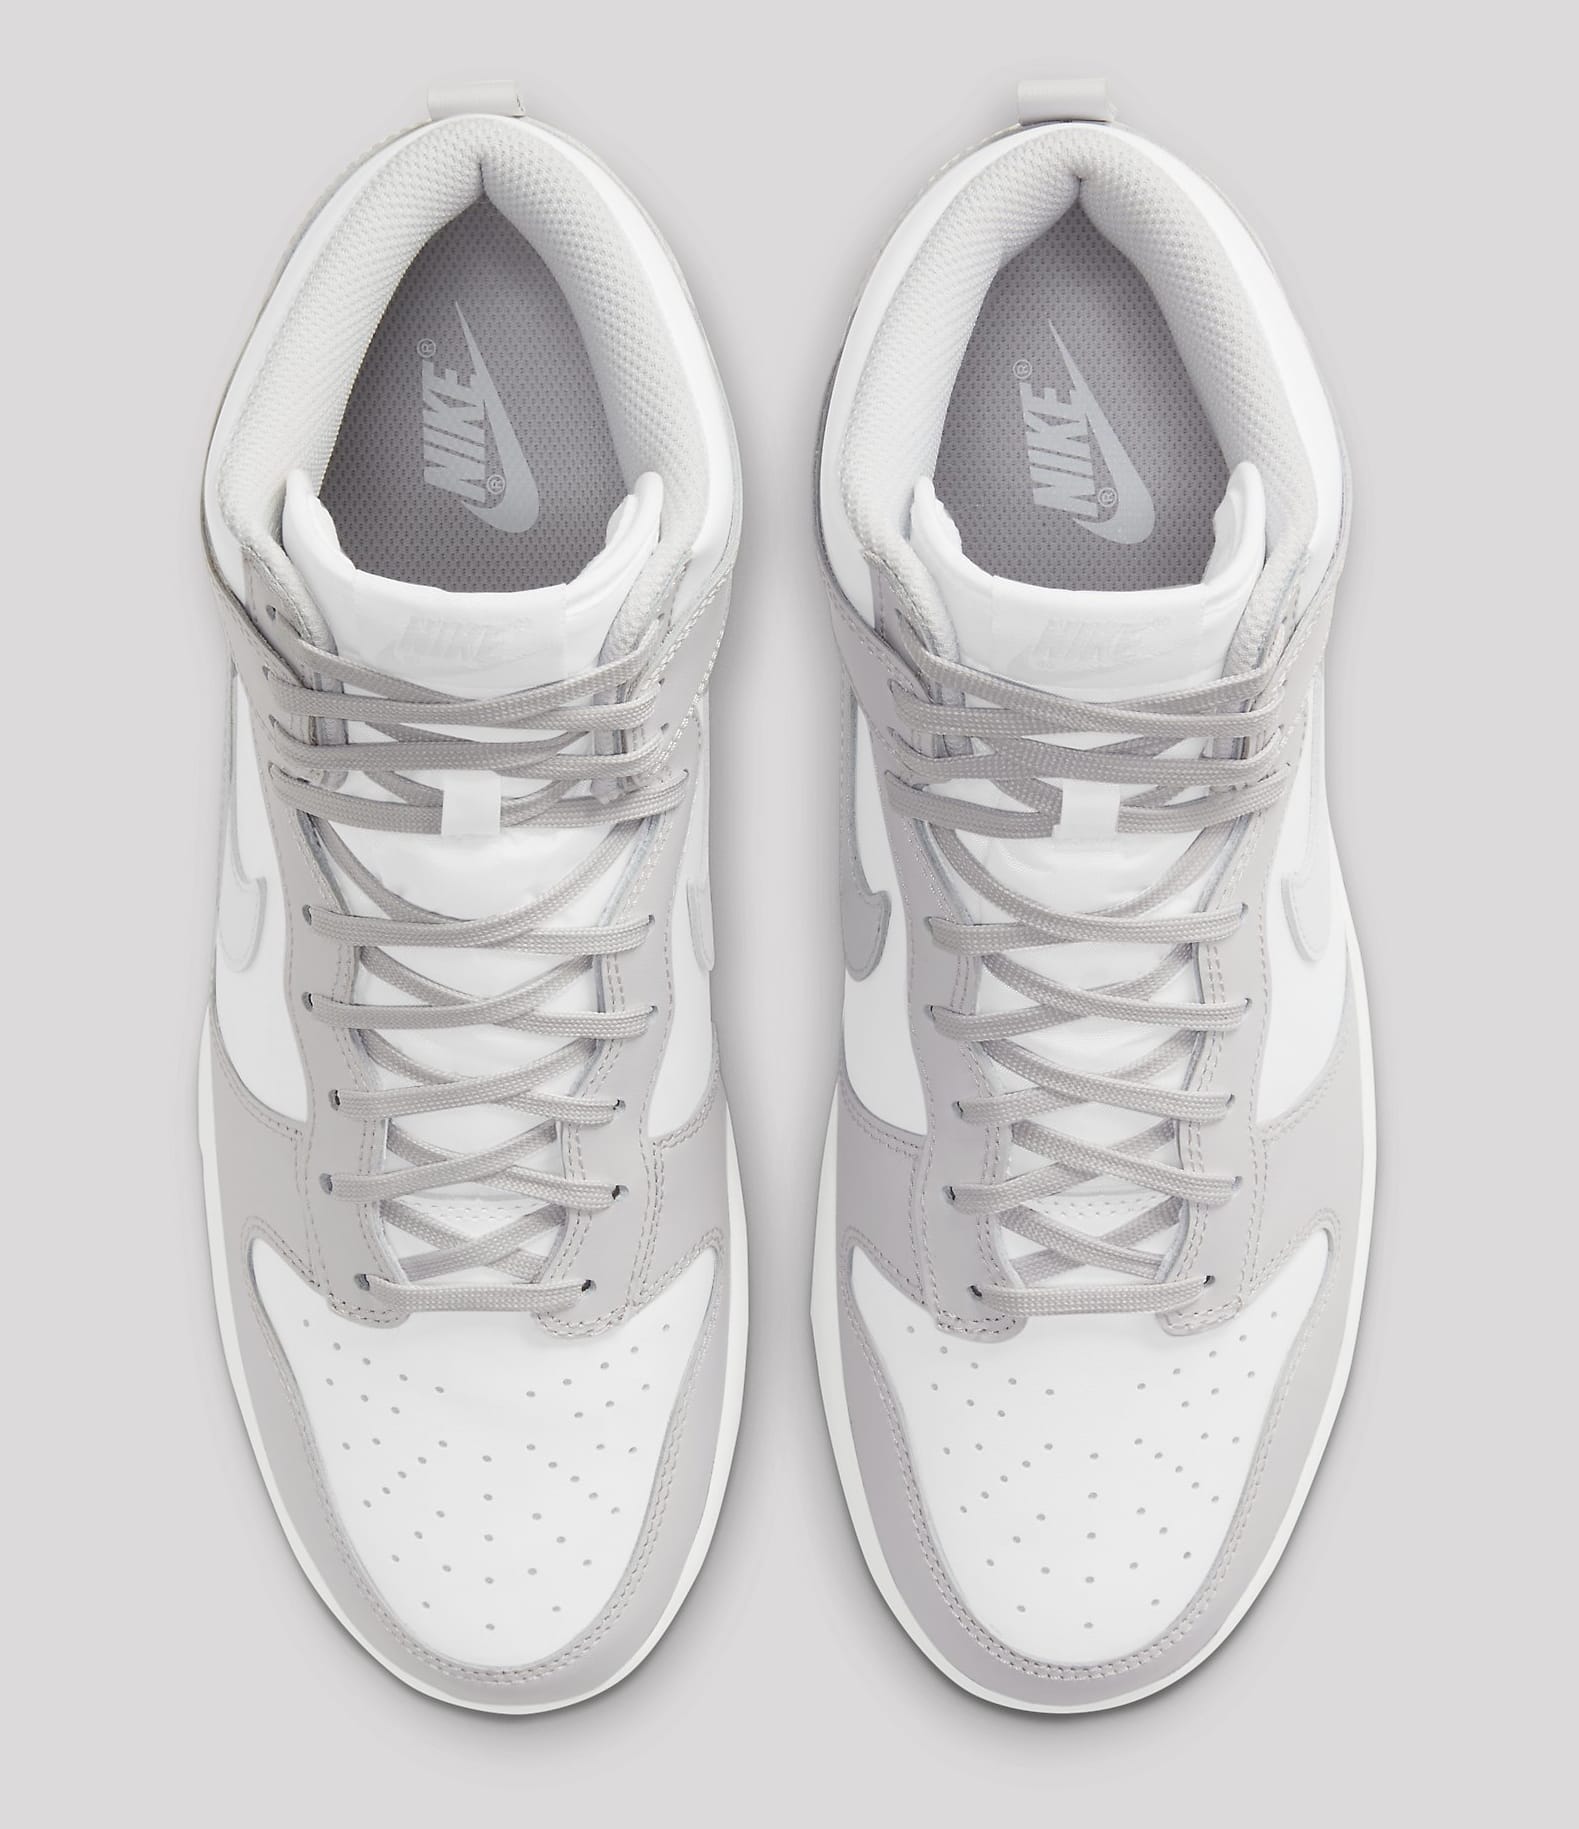 Vast Grey' Nike Dunk Highs Release on Feb. 25 | Complex